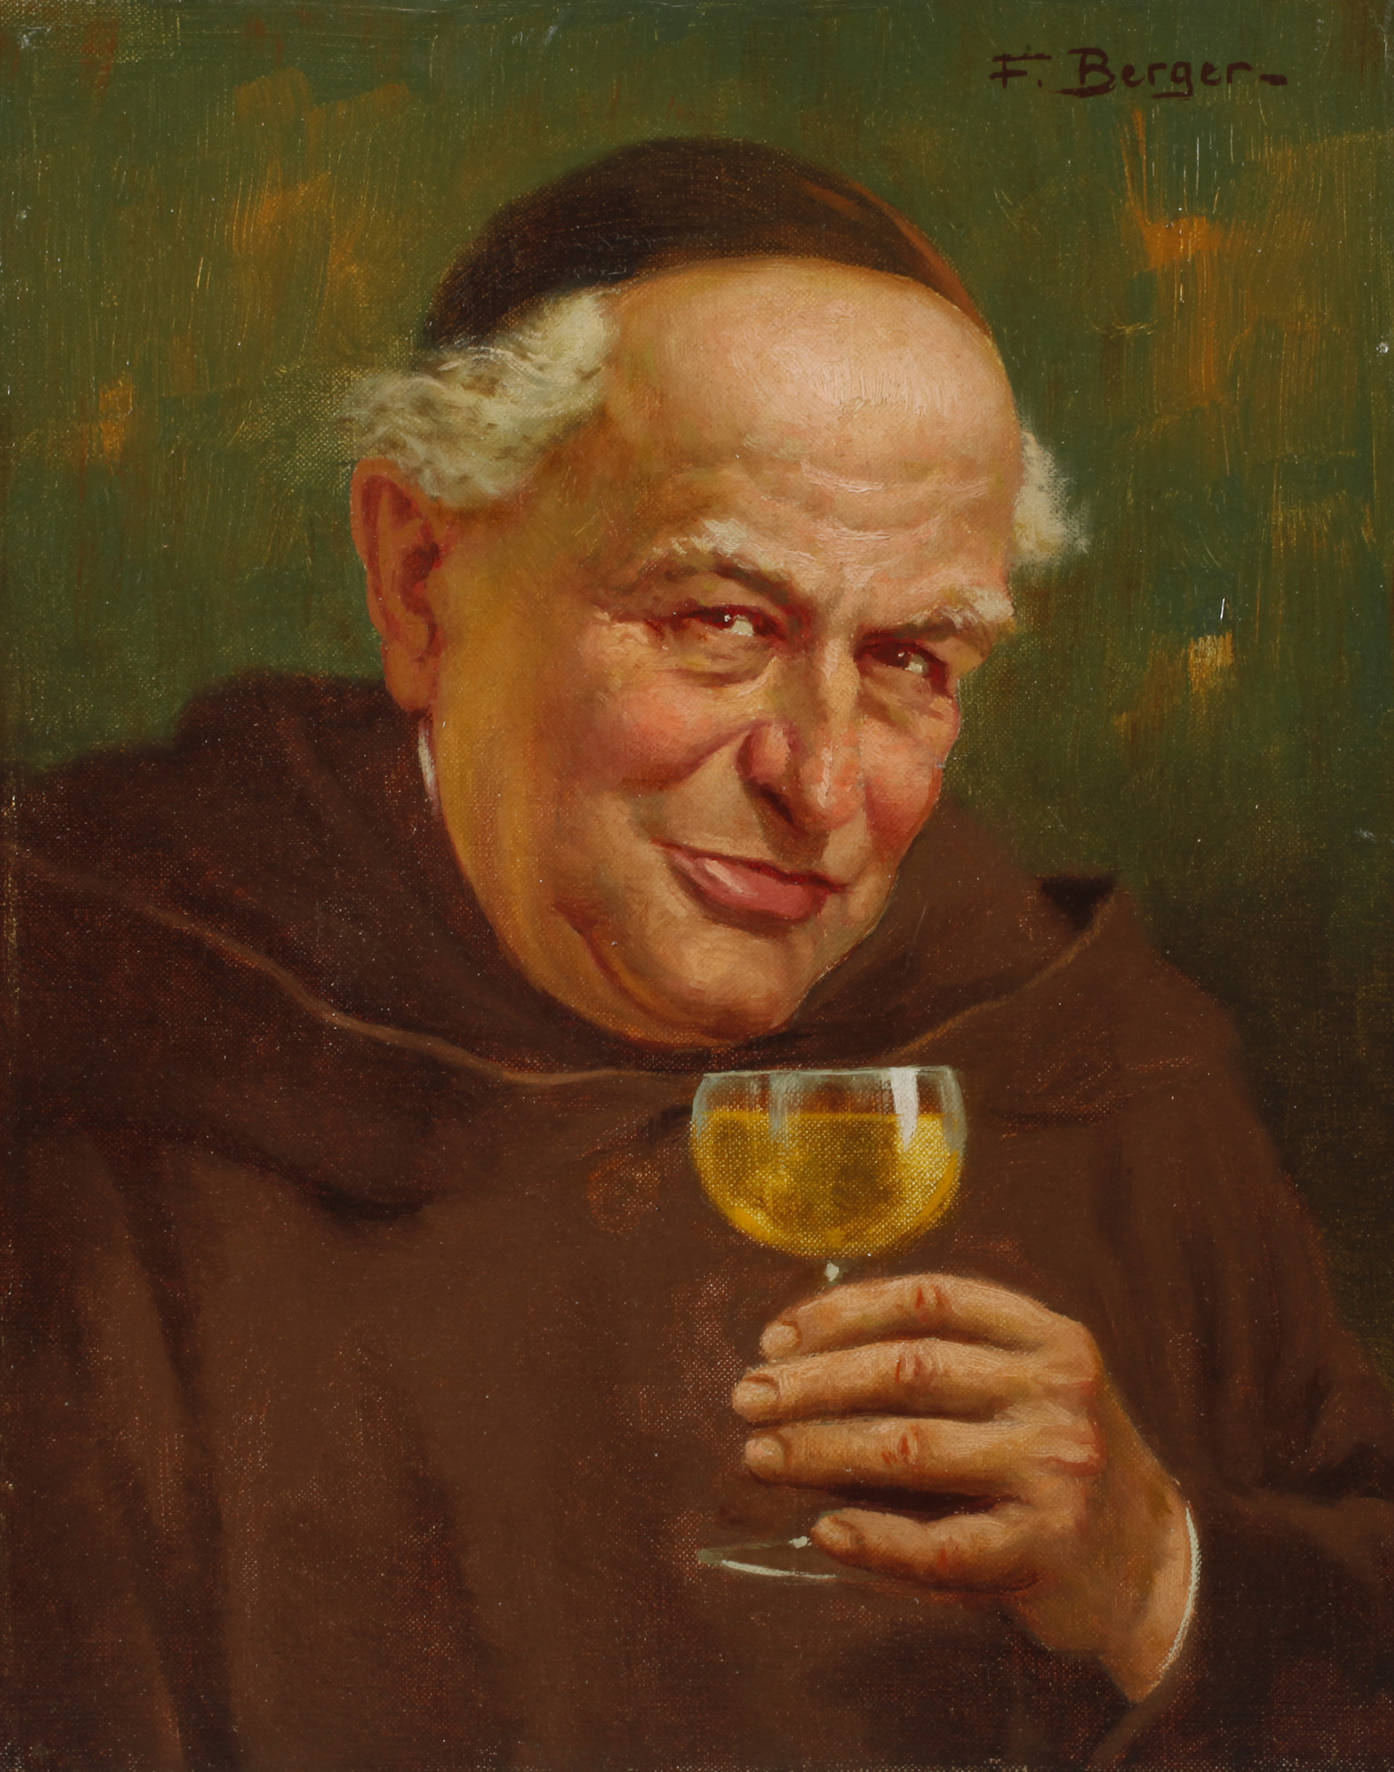 F. Berger, Trinkender Mönch